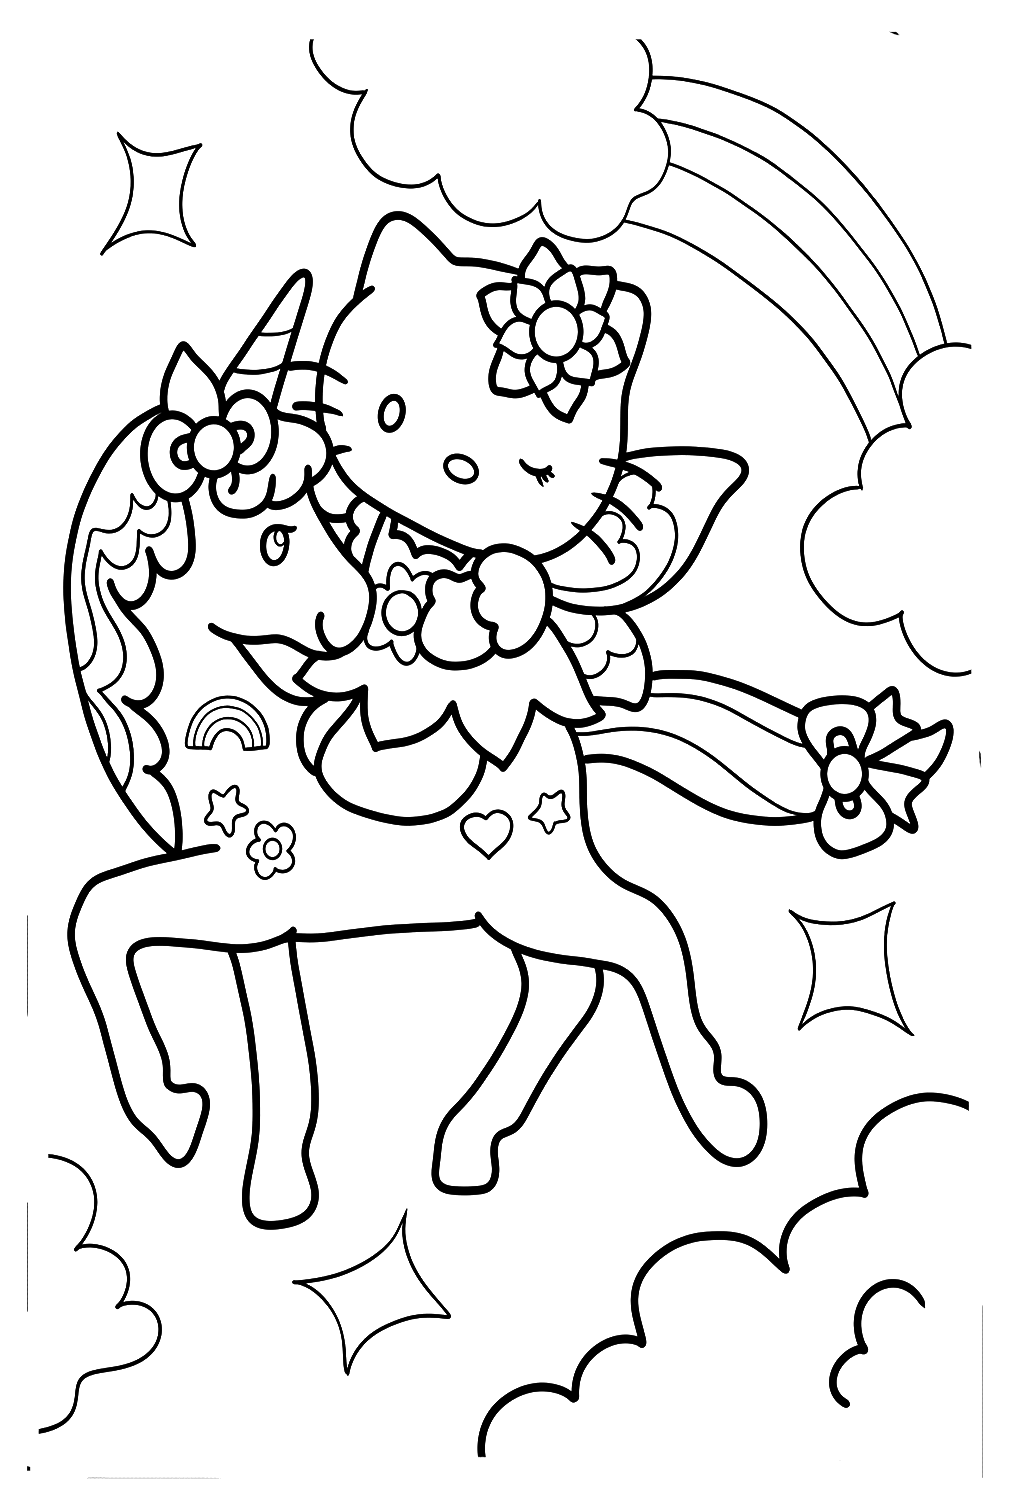 Página para colorear de Hello Kitty con unicornio de Unicornio